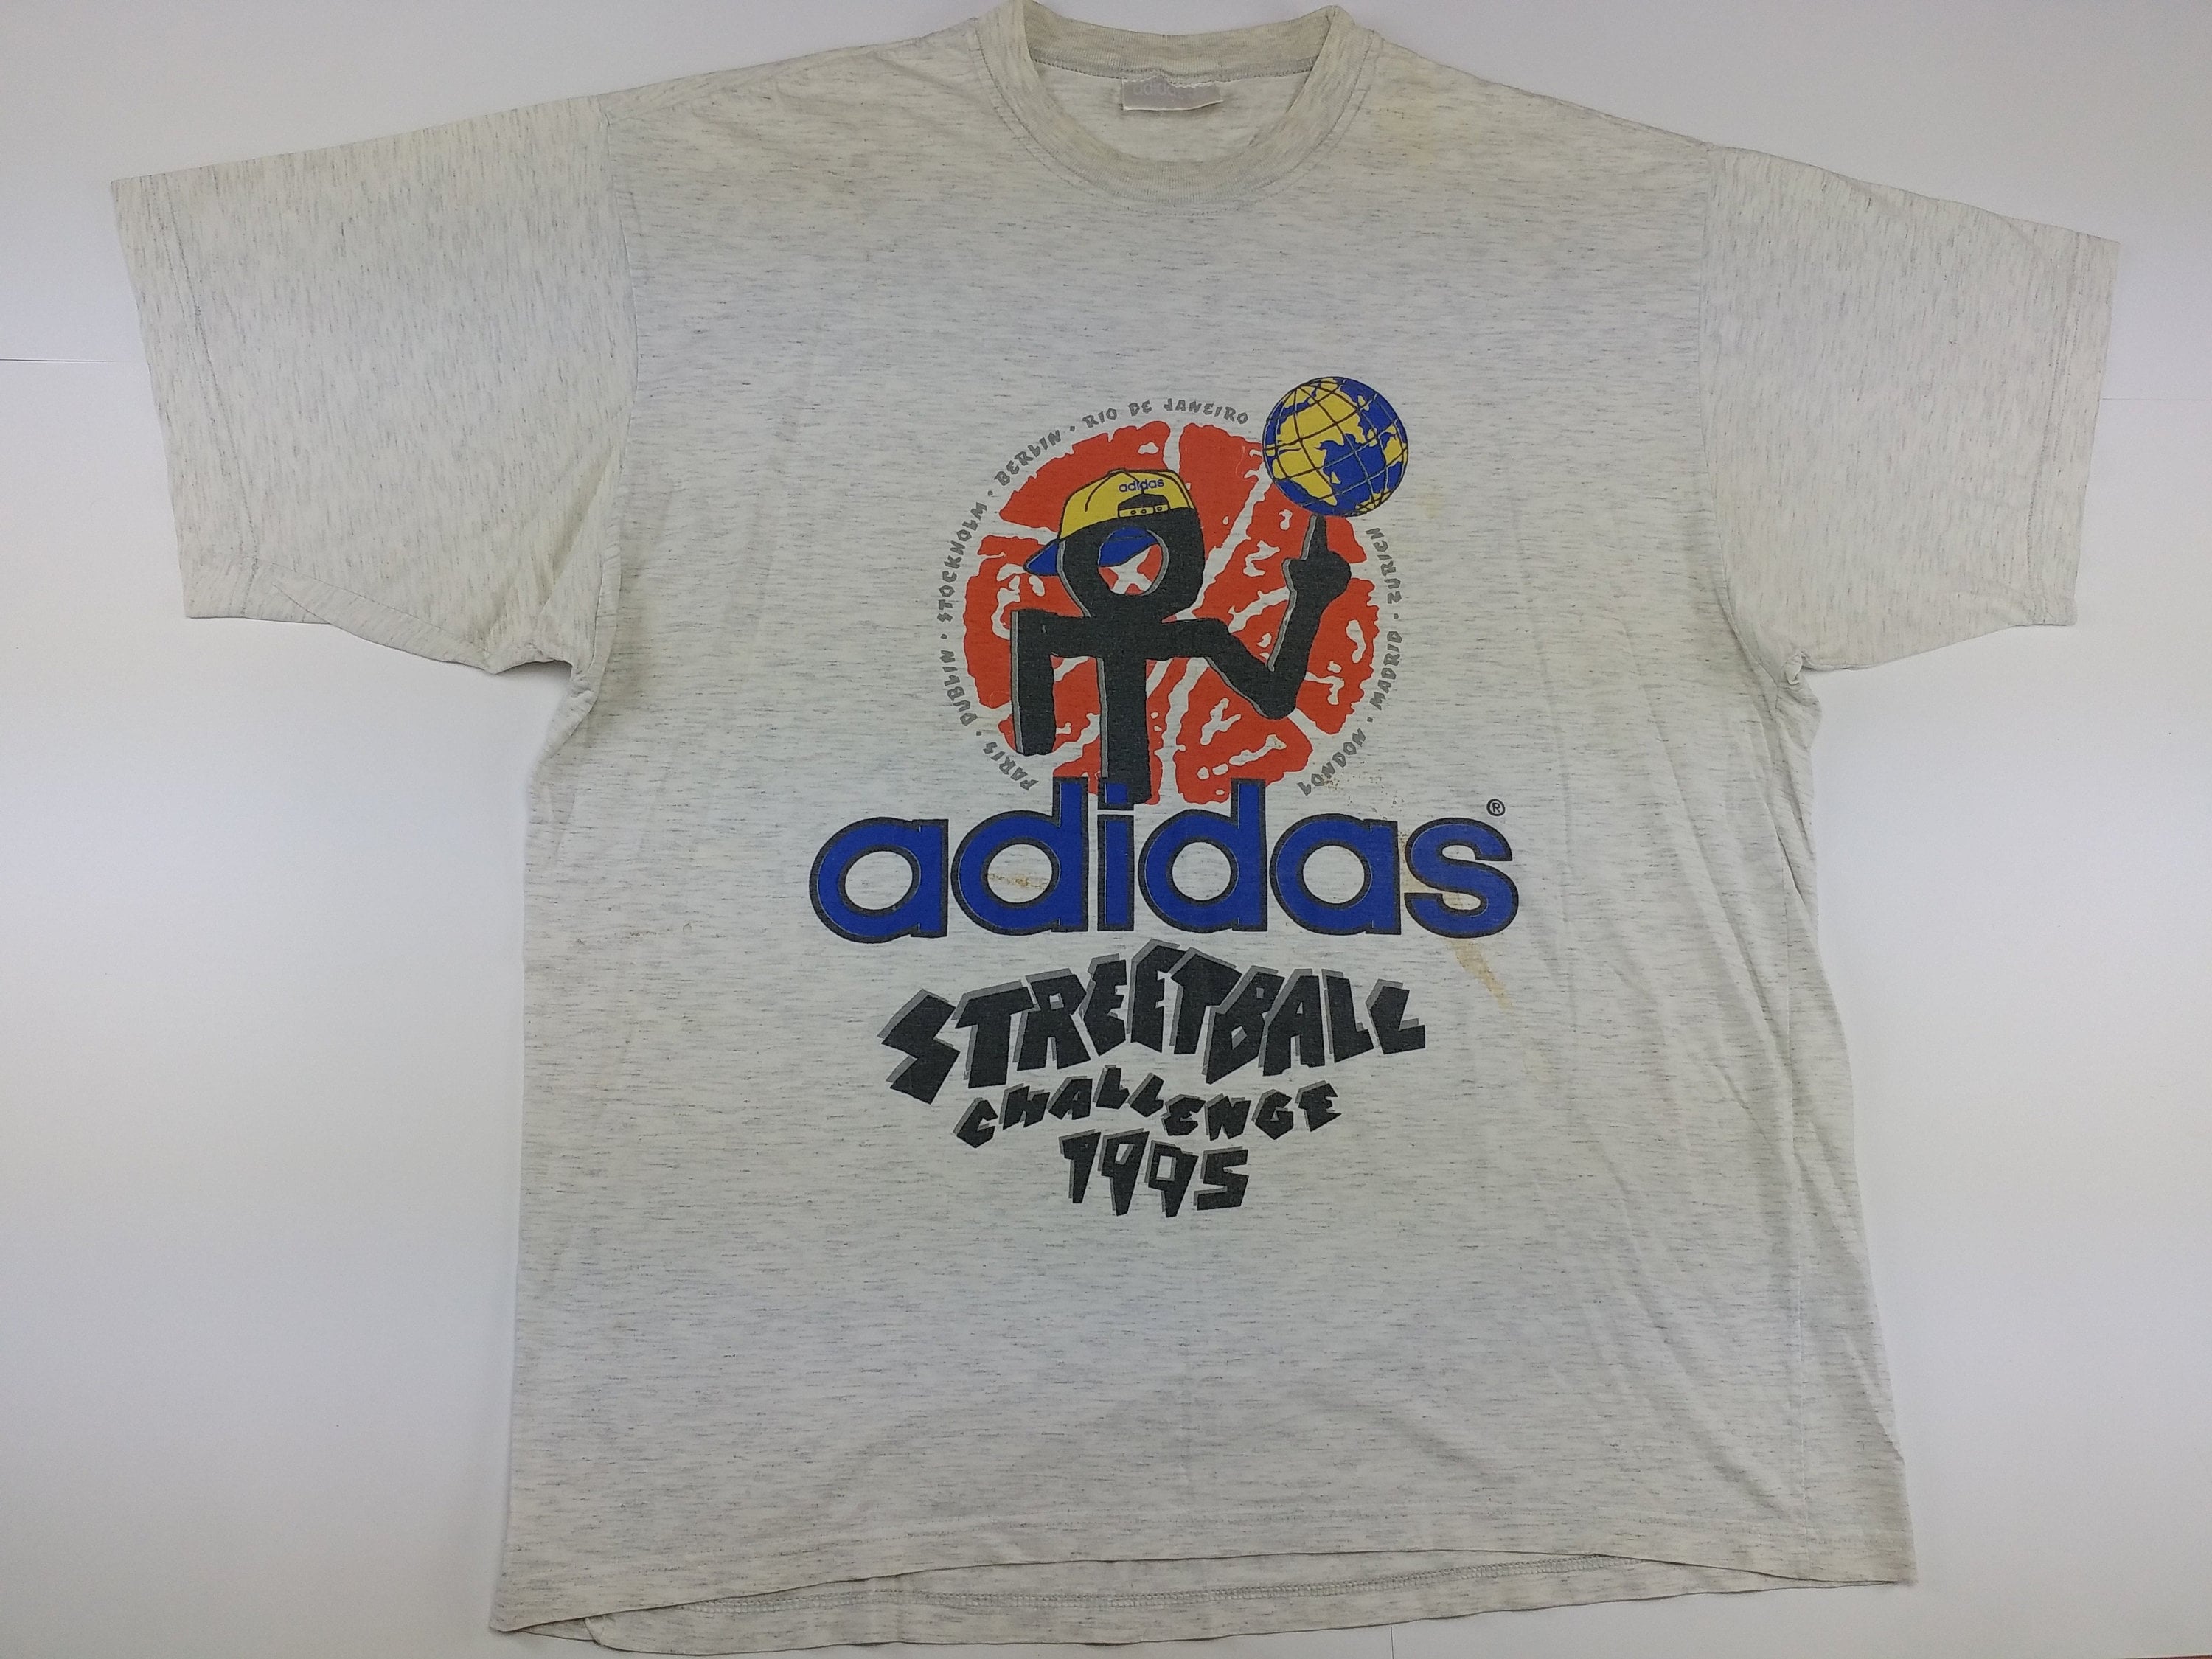 puerta Centralizar misericordia Adidas Streetball Challenge camiseta 1995 hip hop vintage - Etsy España